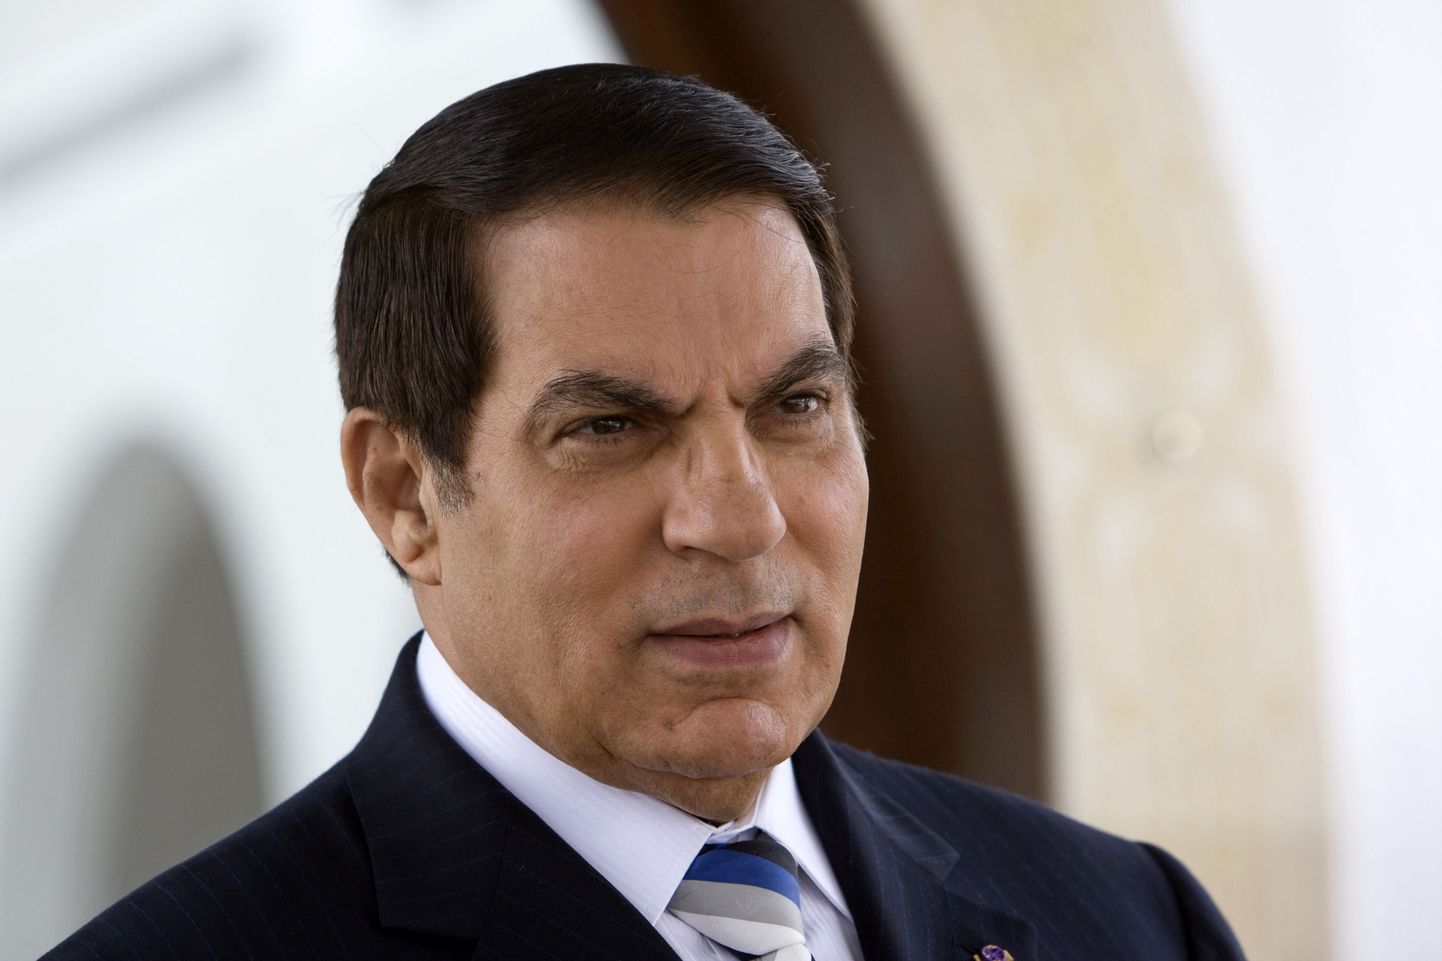 Tuneesia endine president Zine al-Abidine Ben Ali